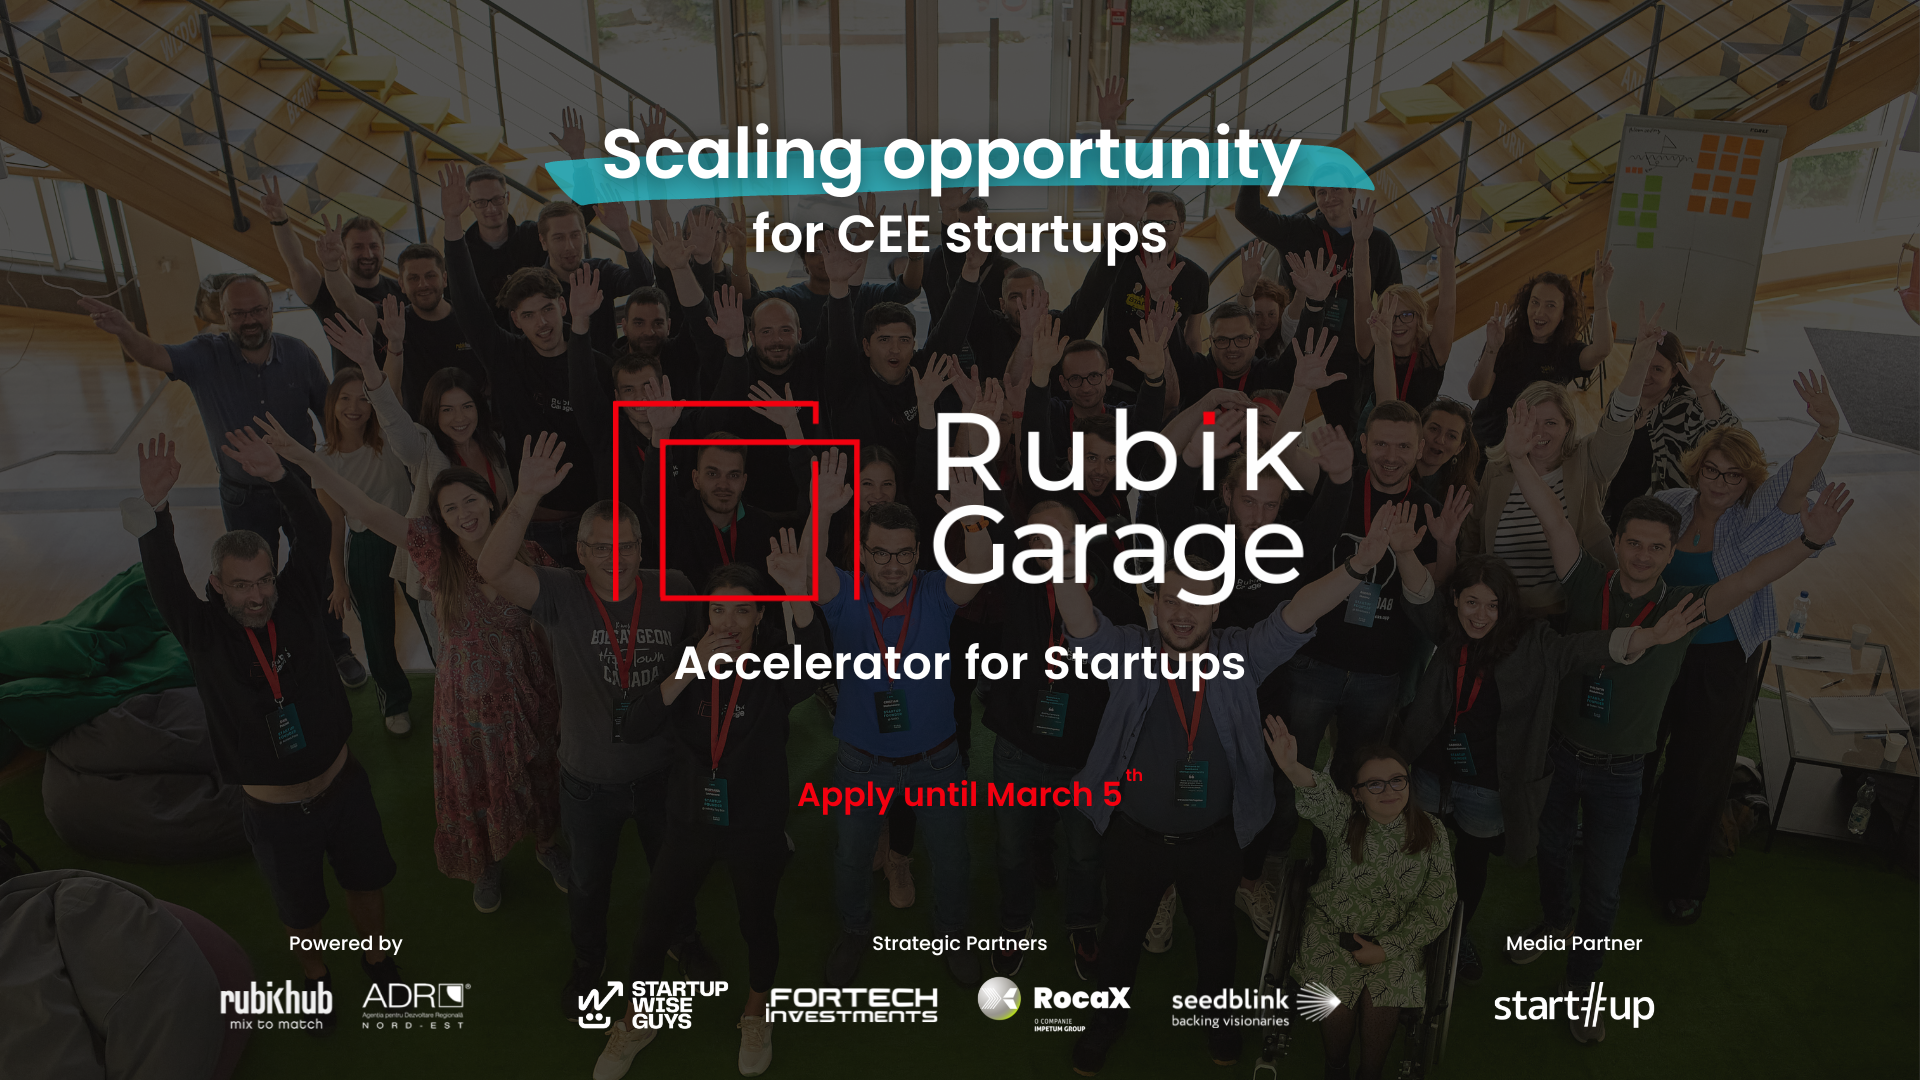 Applications Open for Rubik Garage CEE Accelerator